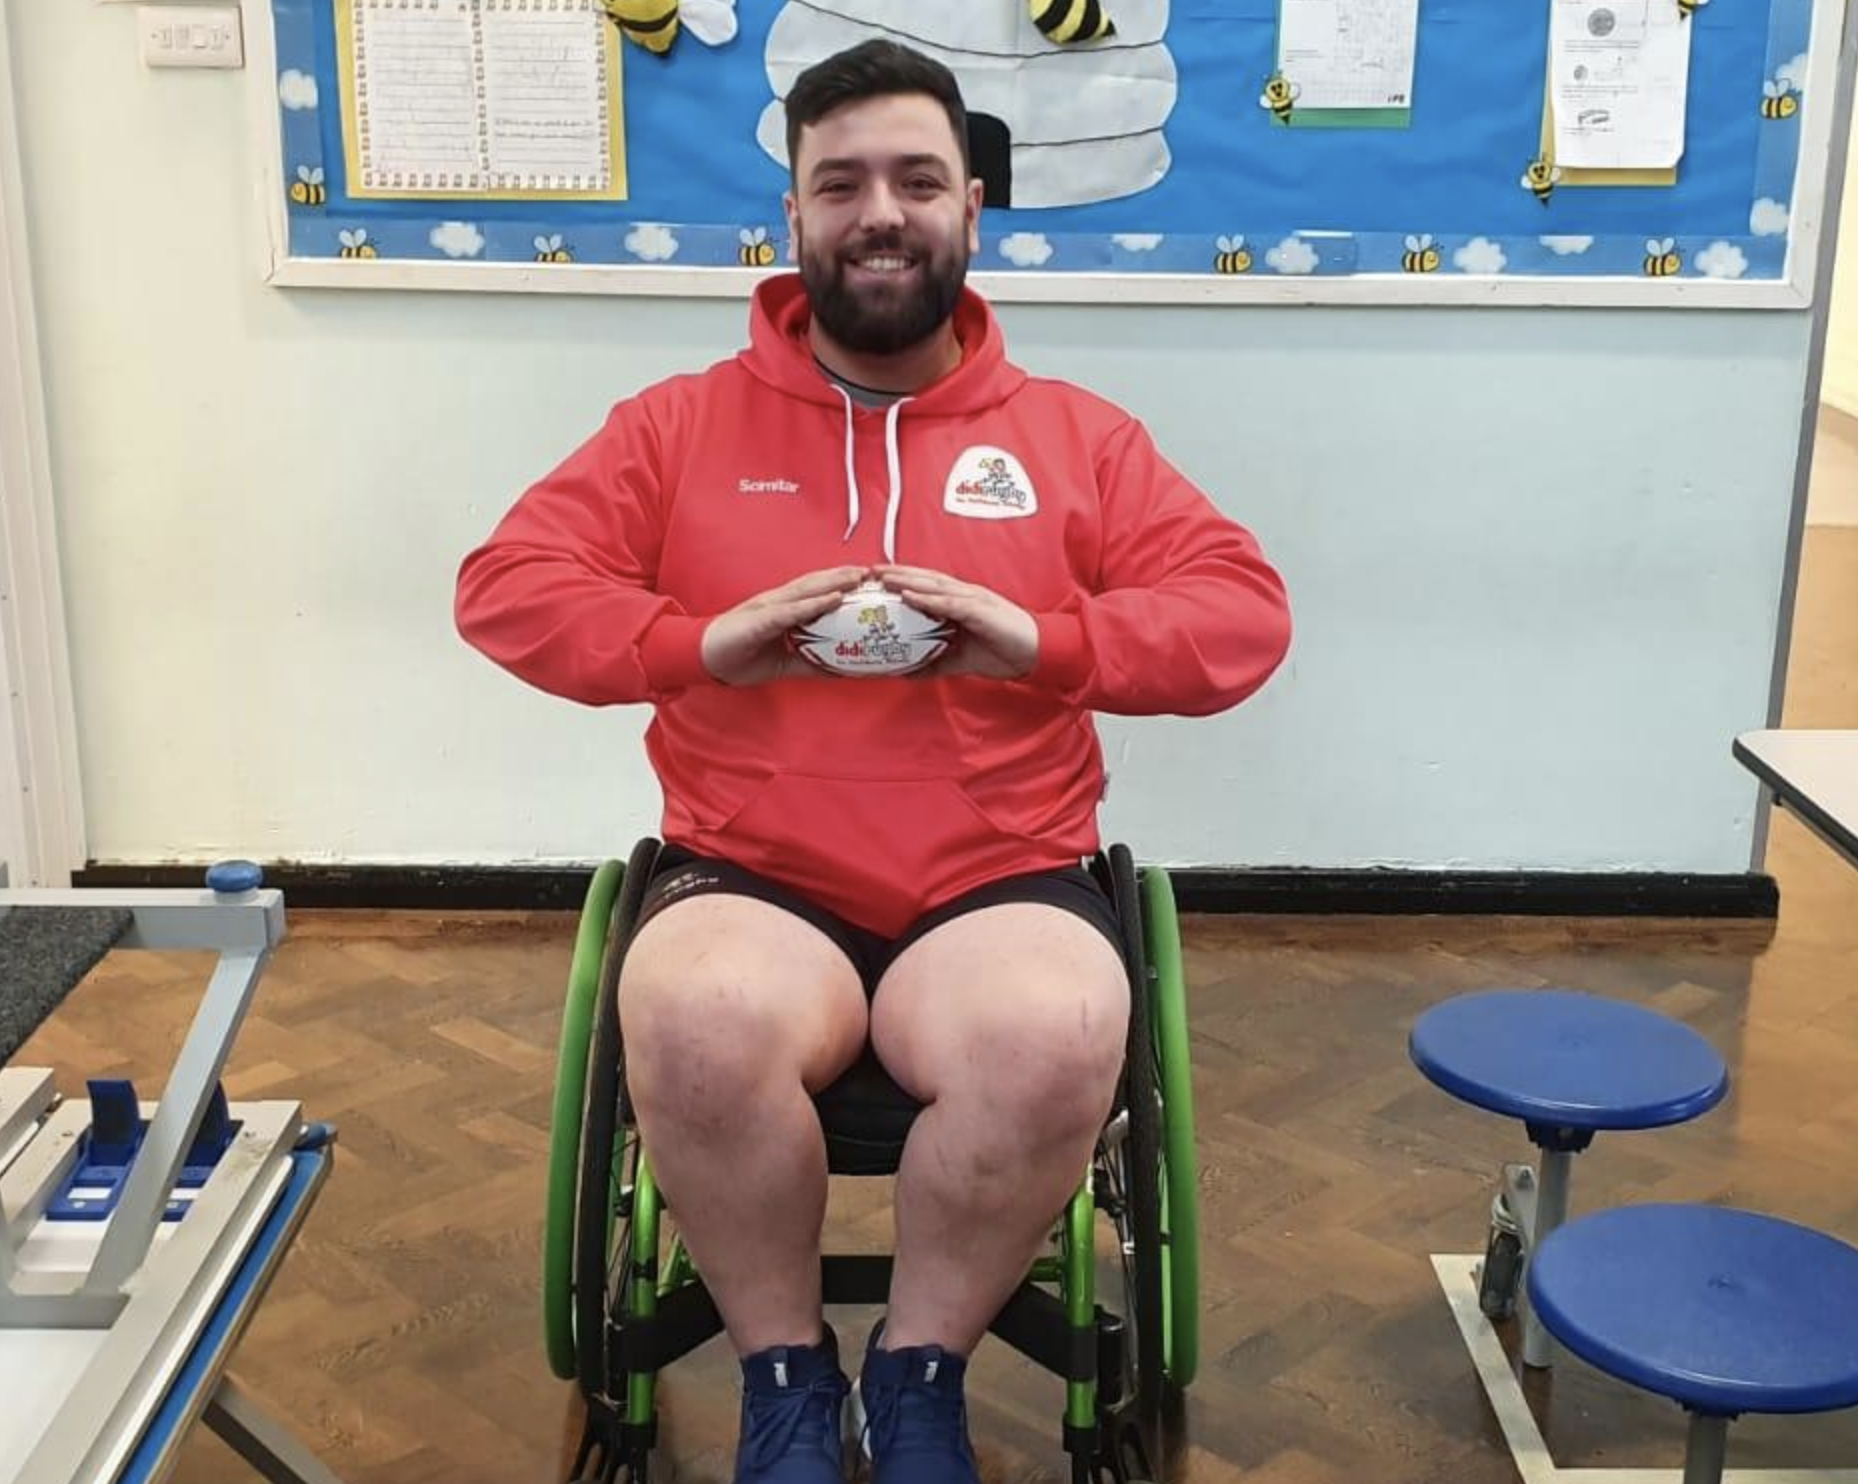 didi rugby coach Umit Akyildiz is in his wheelchair holding a didi rugby ball